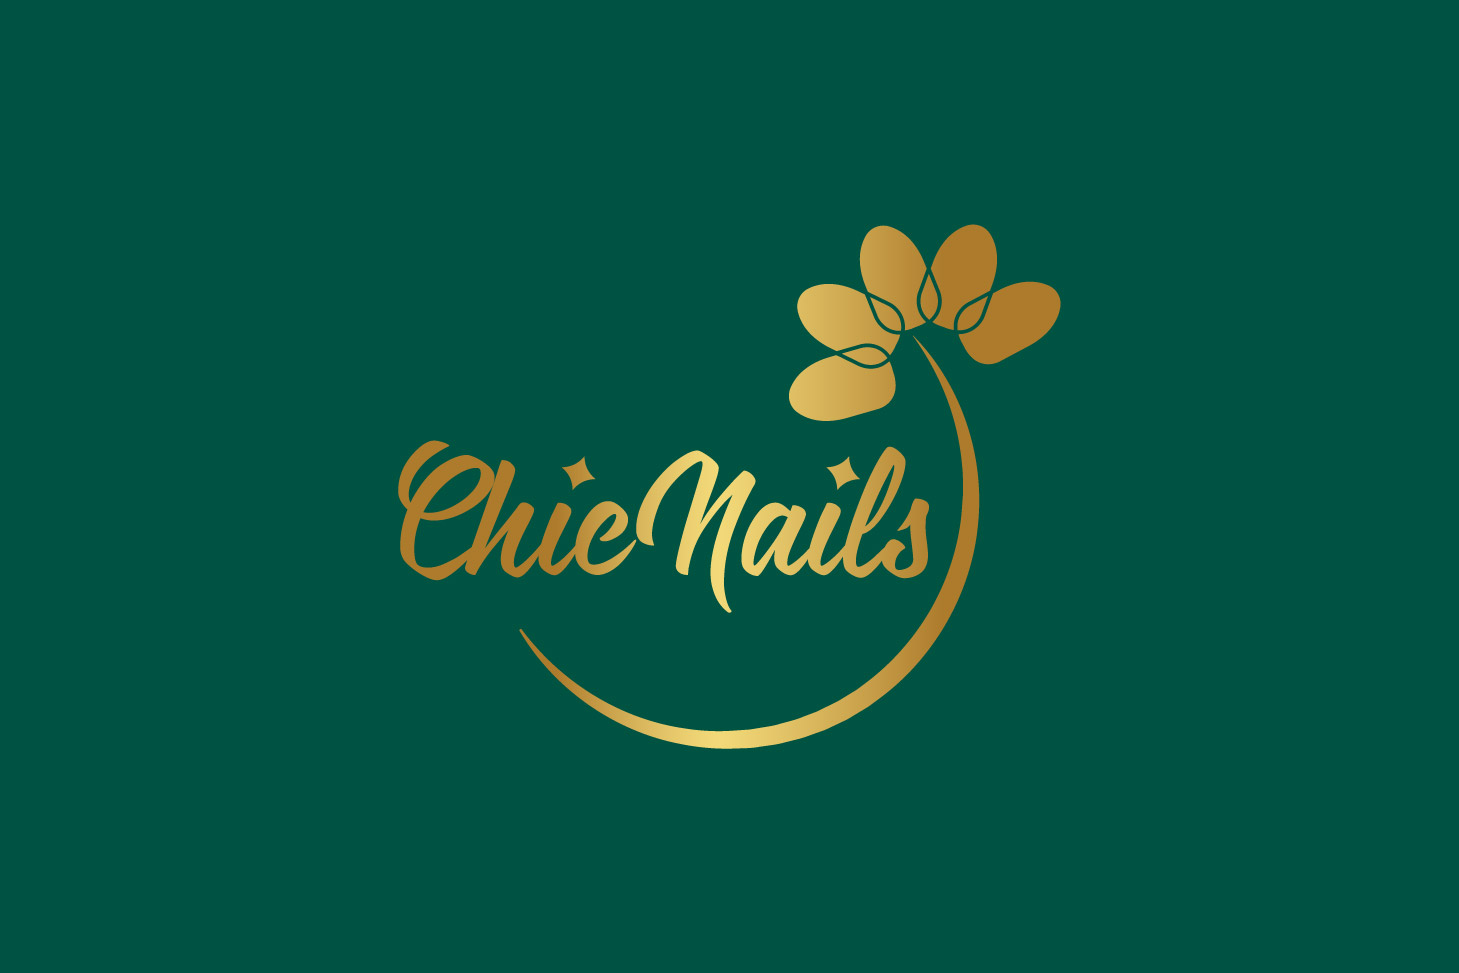 chic nails-03.jpg